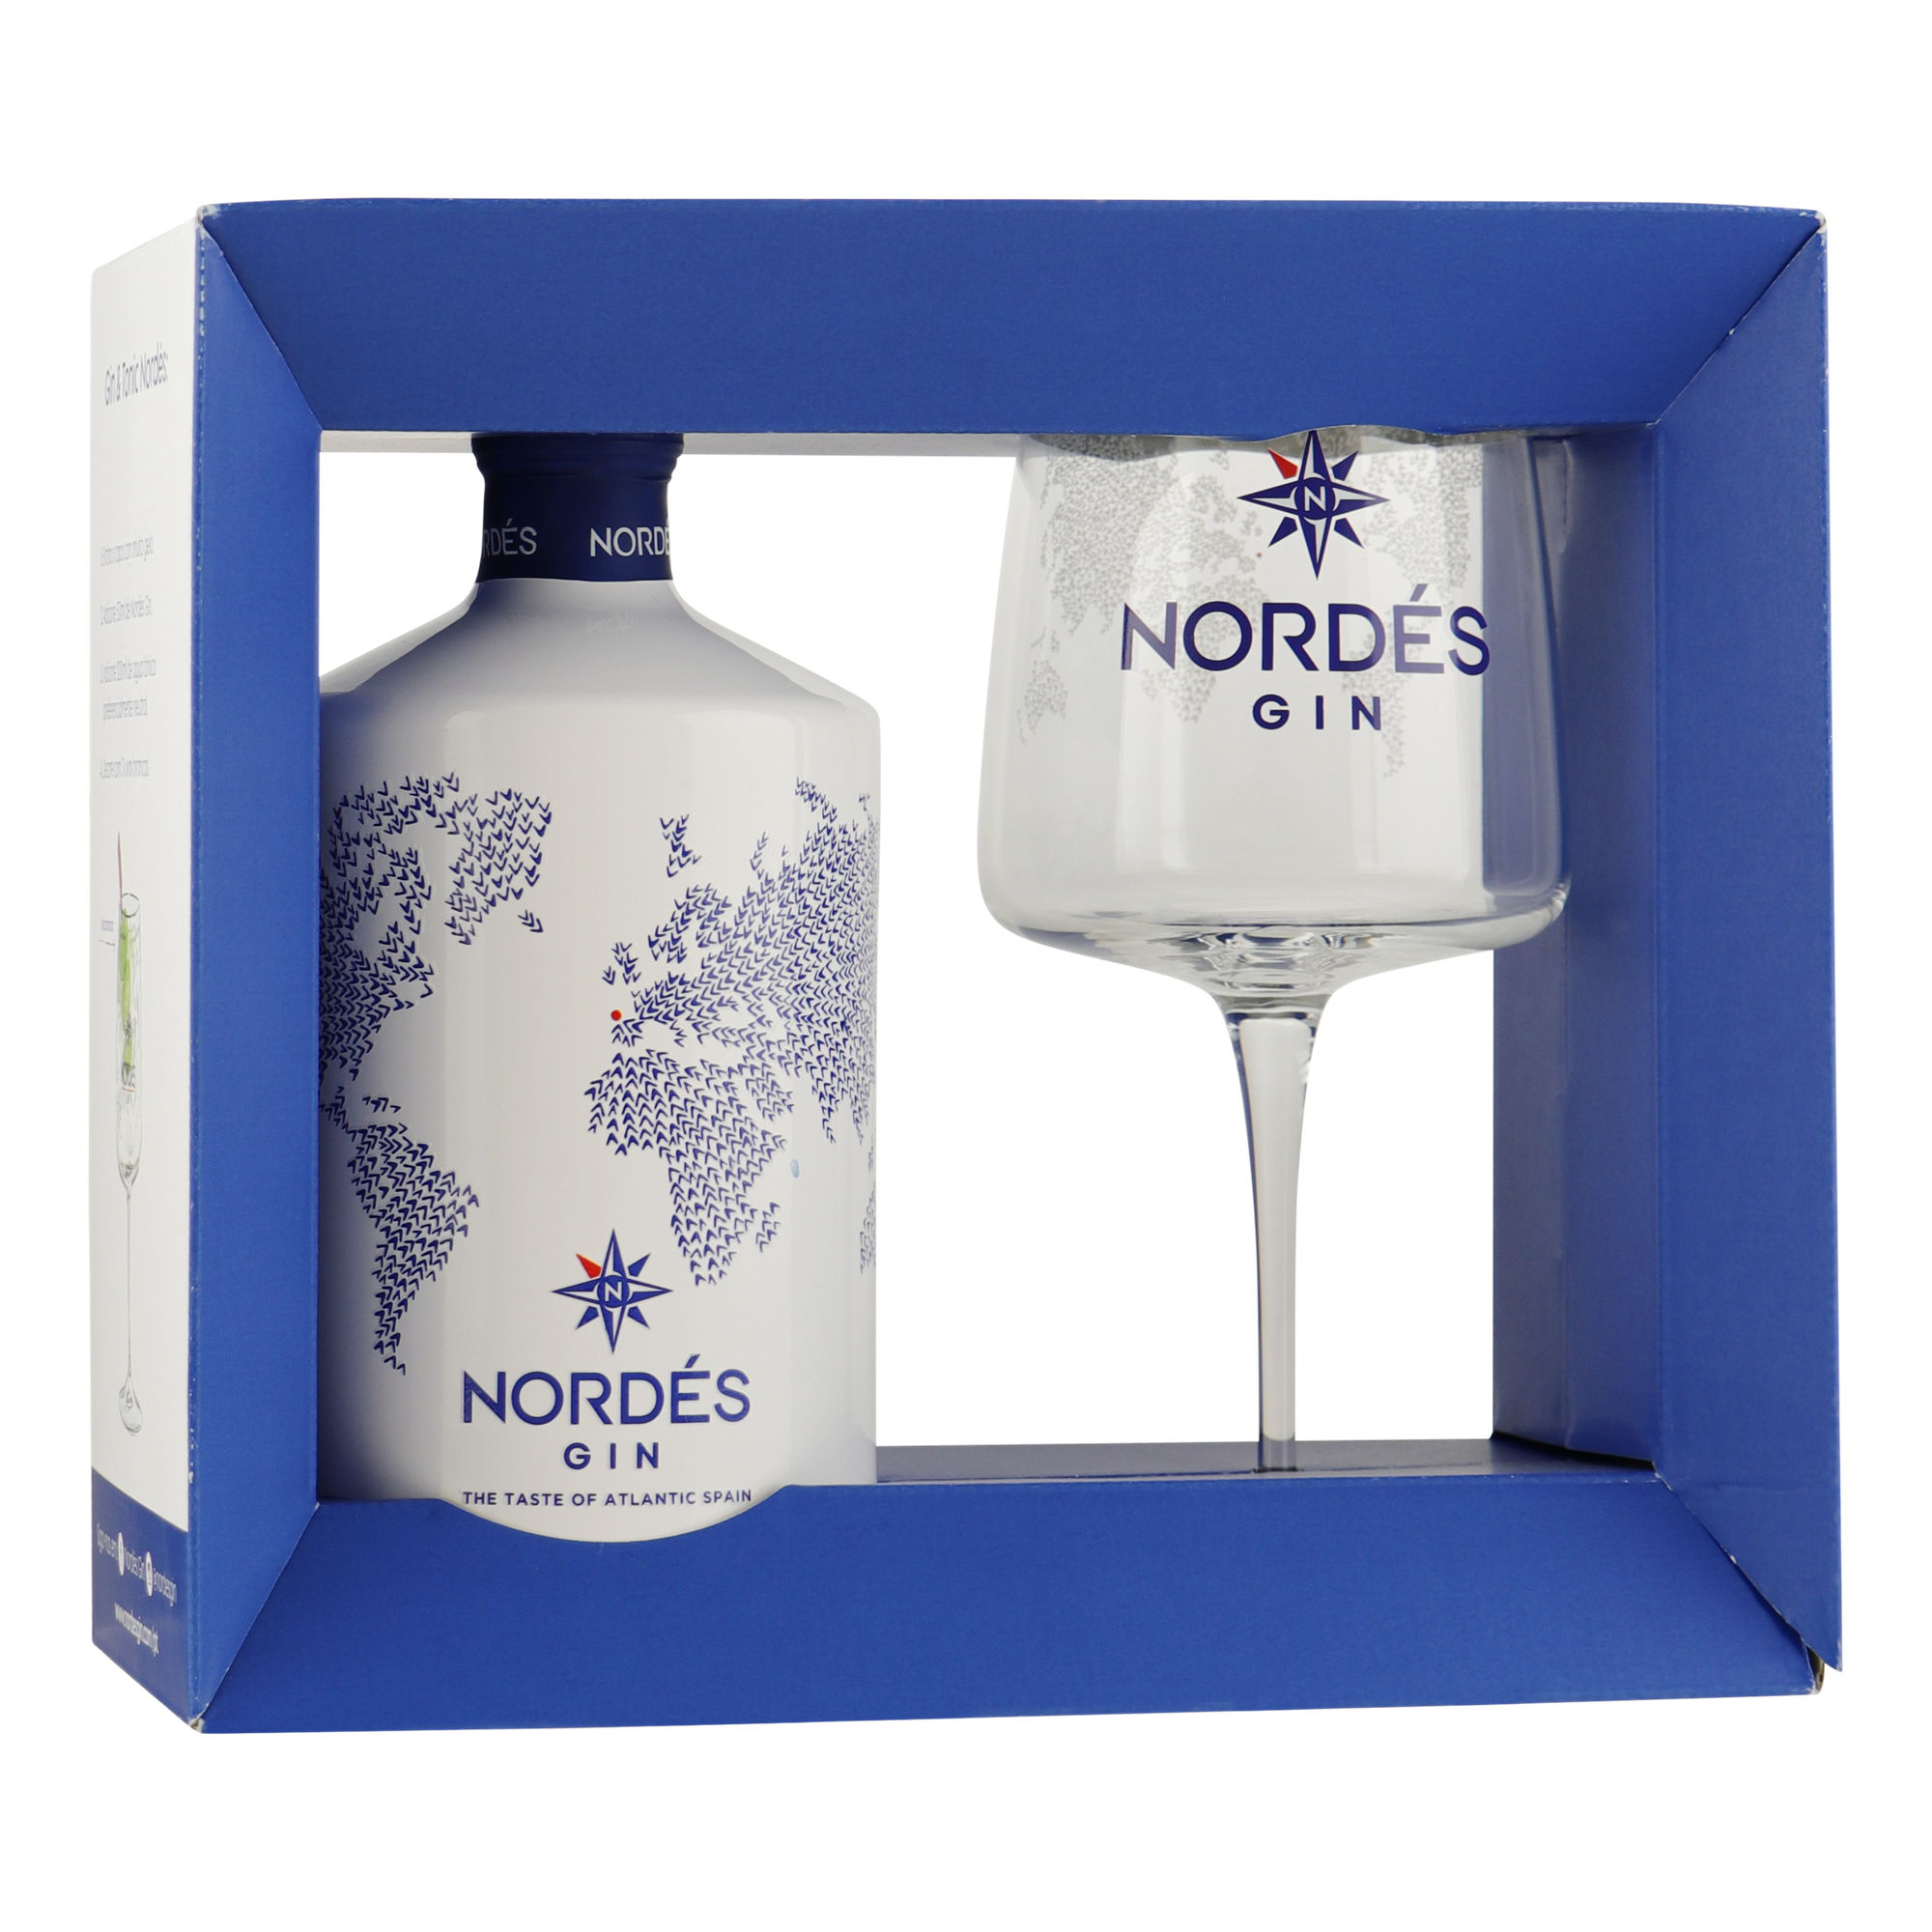 Buy Nordes Atlantic Galician Gin 1L at the best price - Paneco Singapore